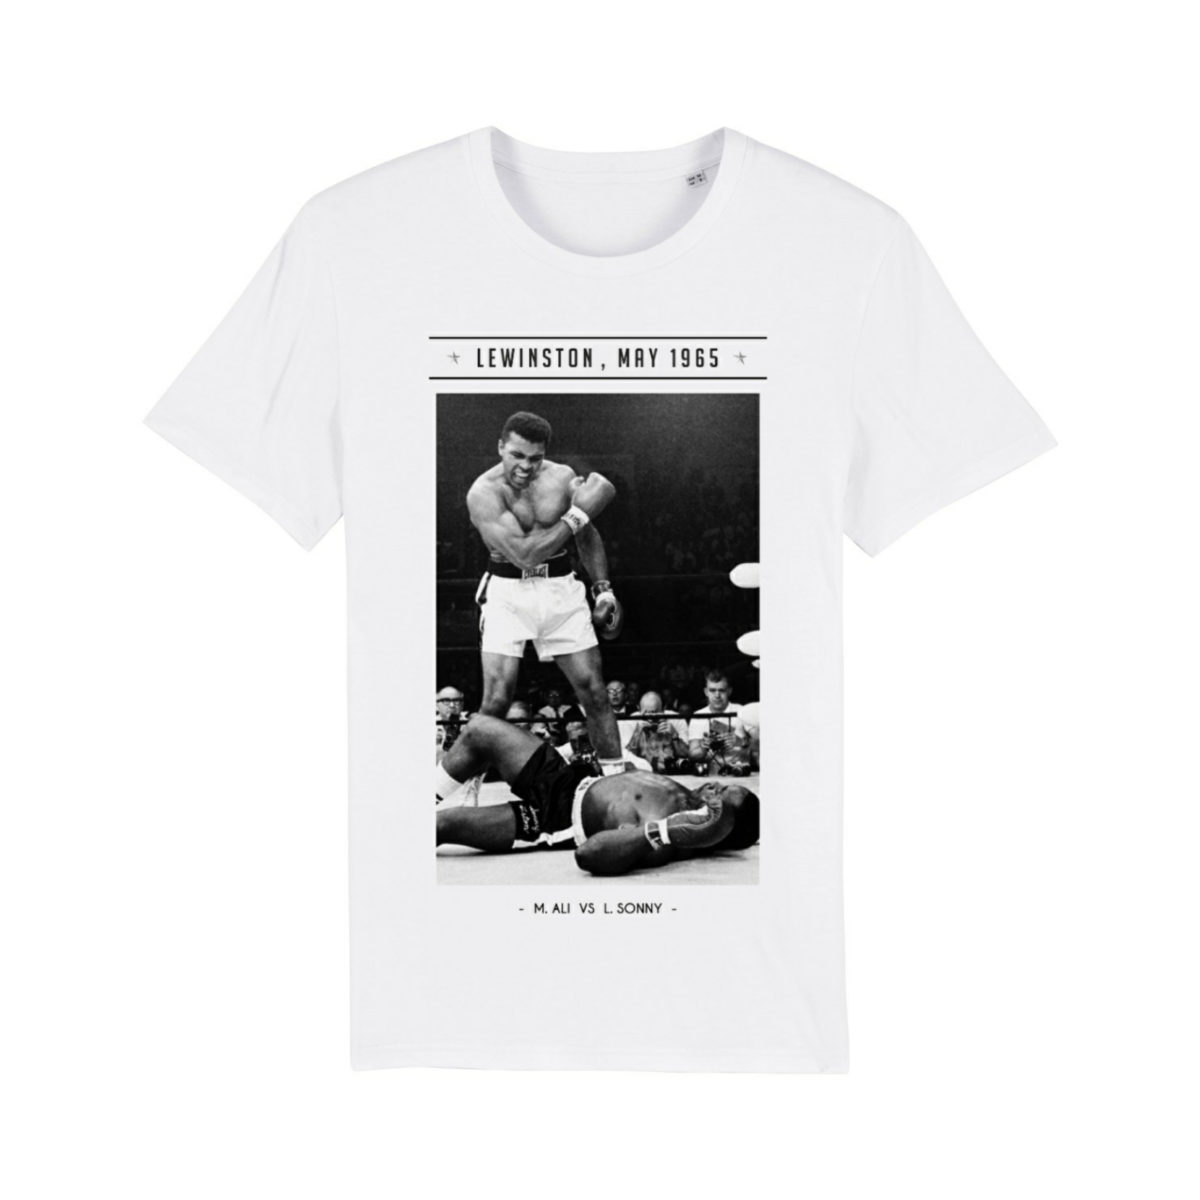 My T-Shirt Afro – “Muhammad Ali vs Sonny Liston”